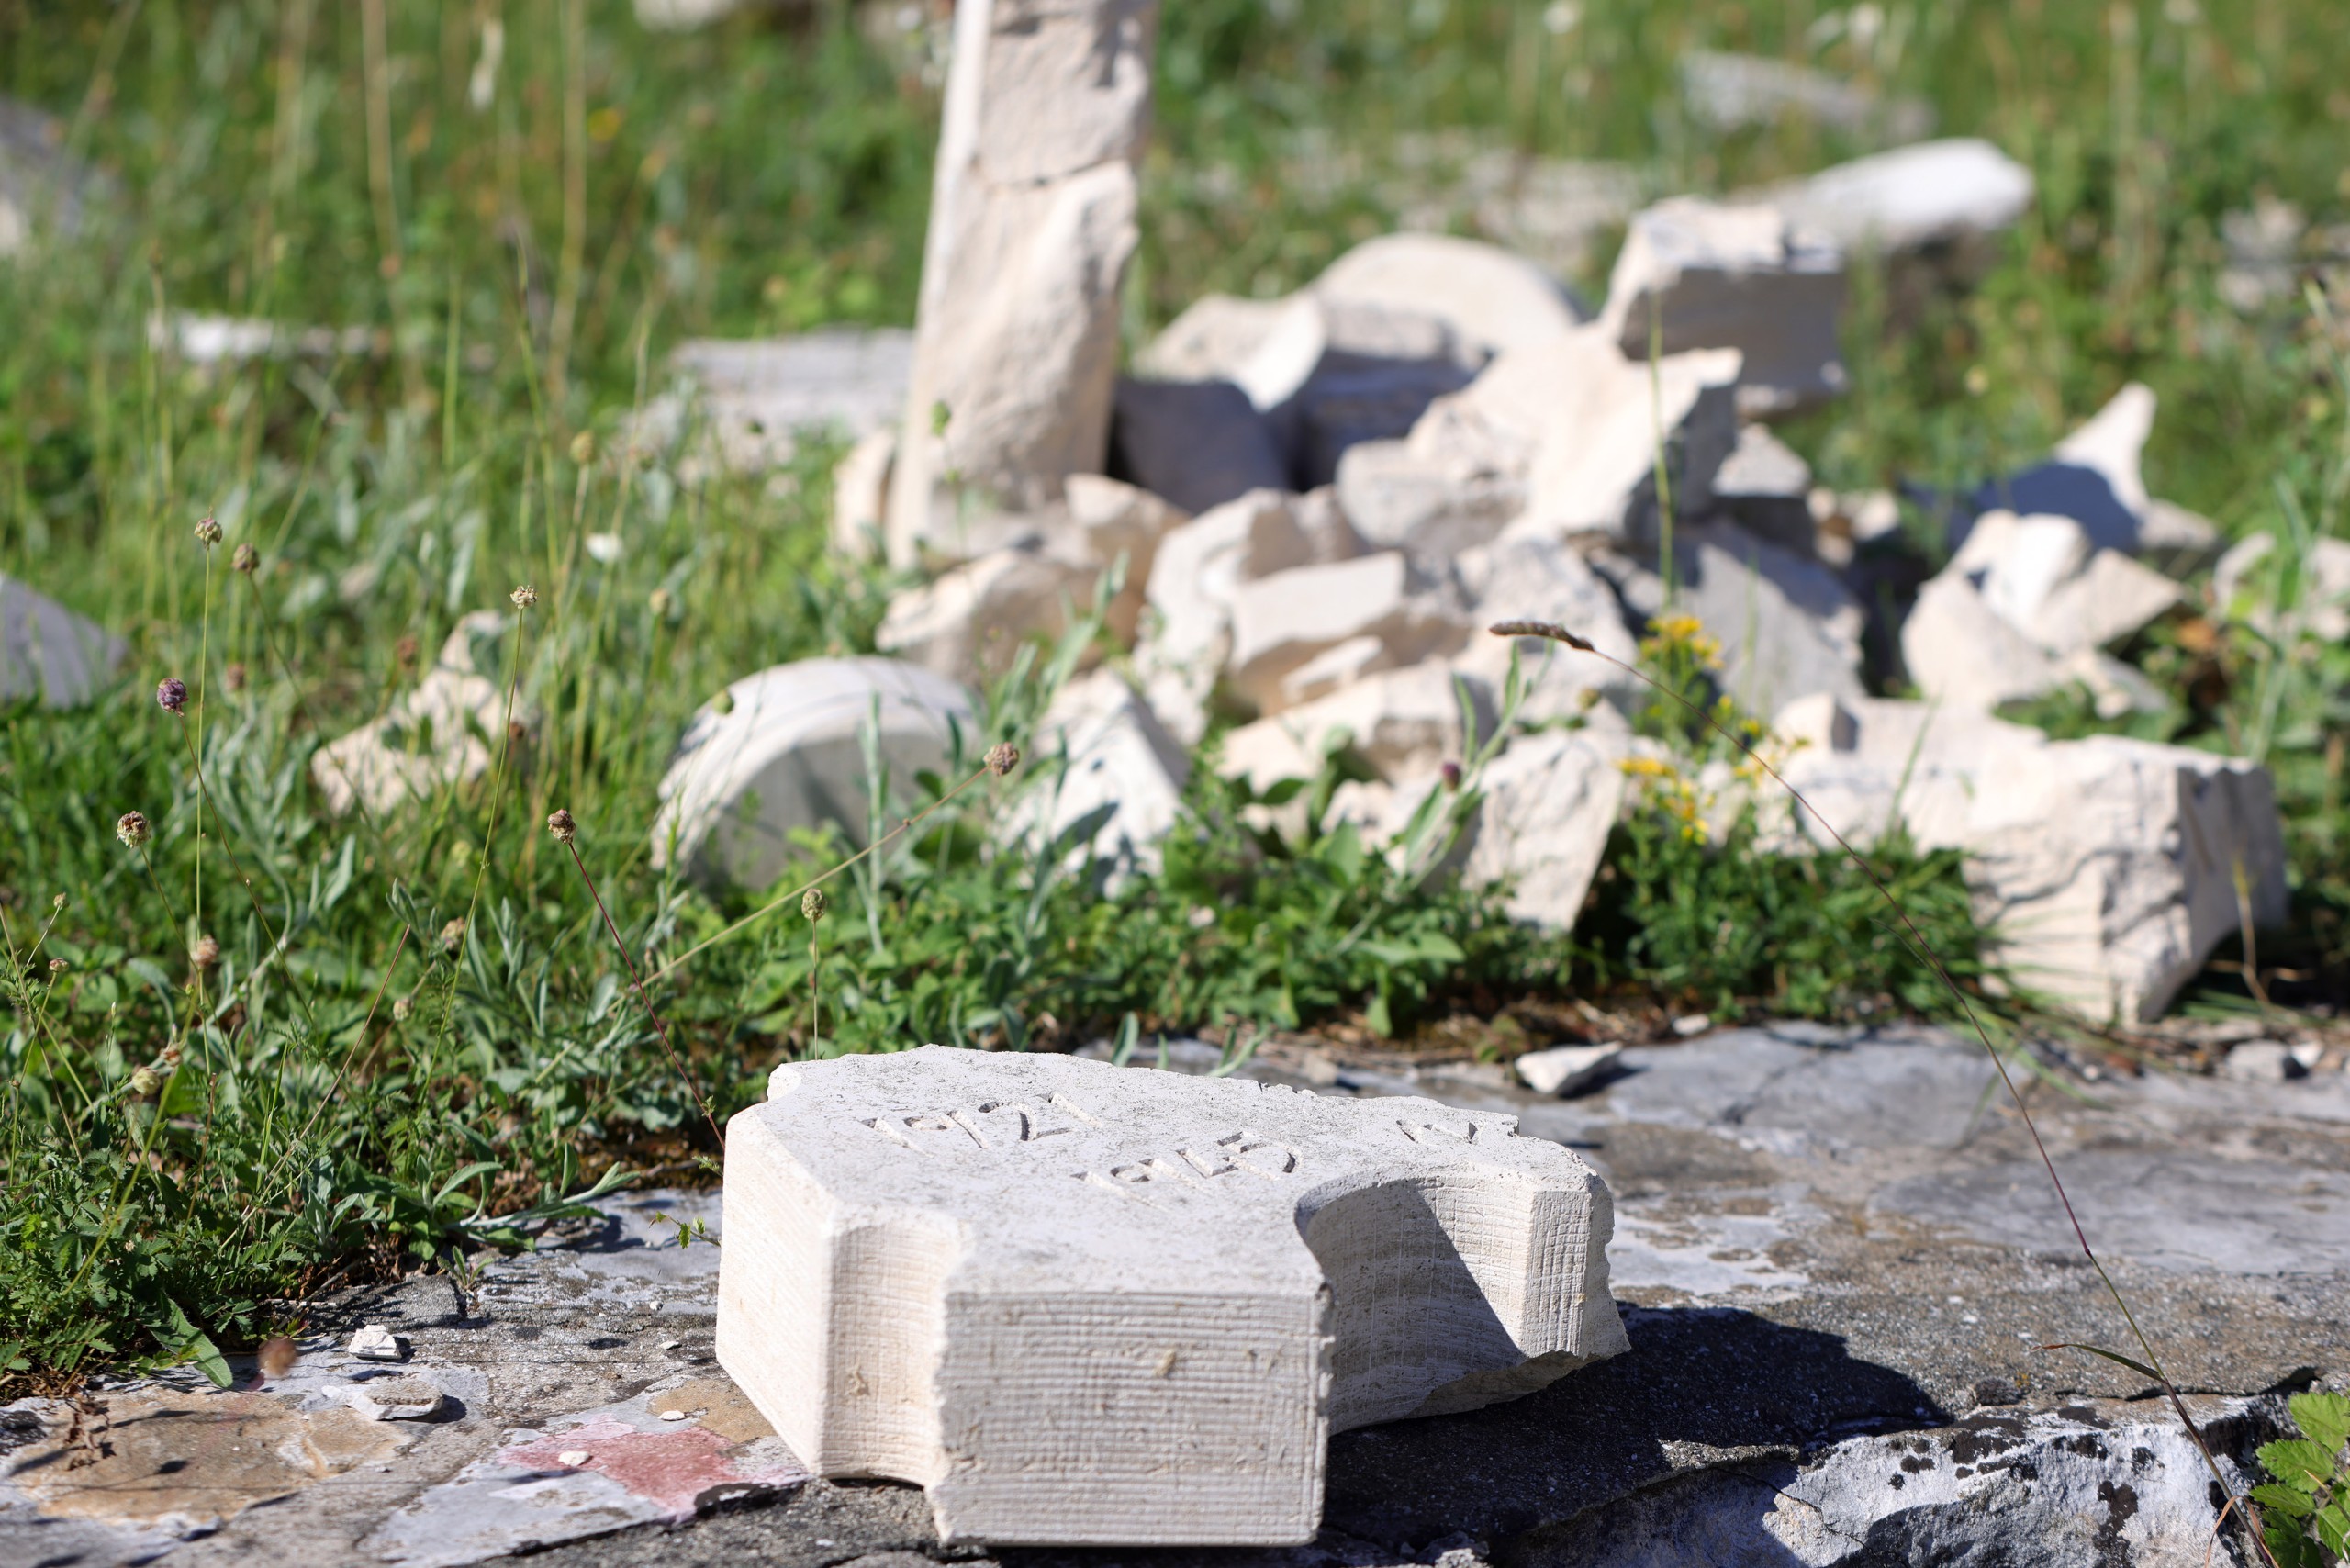 15.06.2022., Mostar, Bosna i Hercegovina - Partizansko spomen groblje ponovno je na meti vandala. Ovog puta devastirano je kao nikad prije, te je unistena gotovo svaka ploca koja se nalazila na spomen groblju. Photo: Denis Kapetanovic/PIXSELL